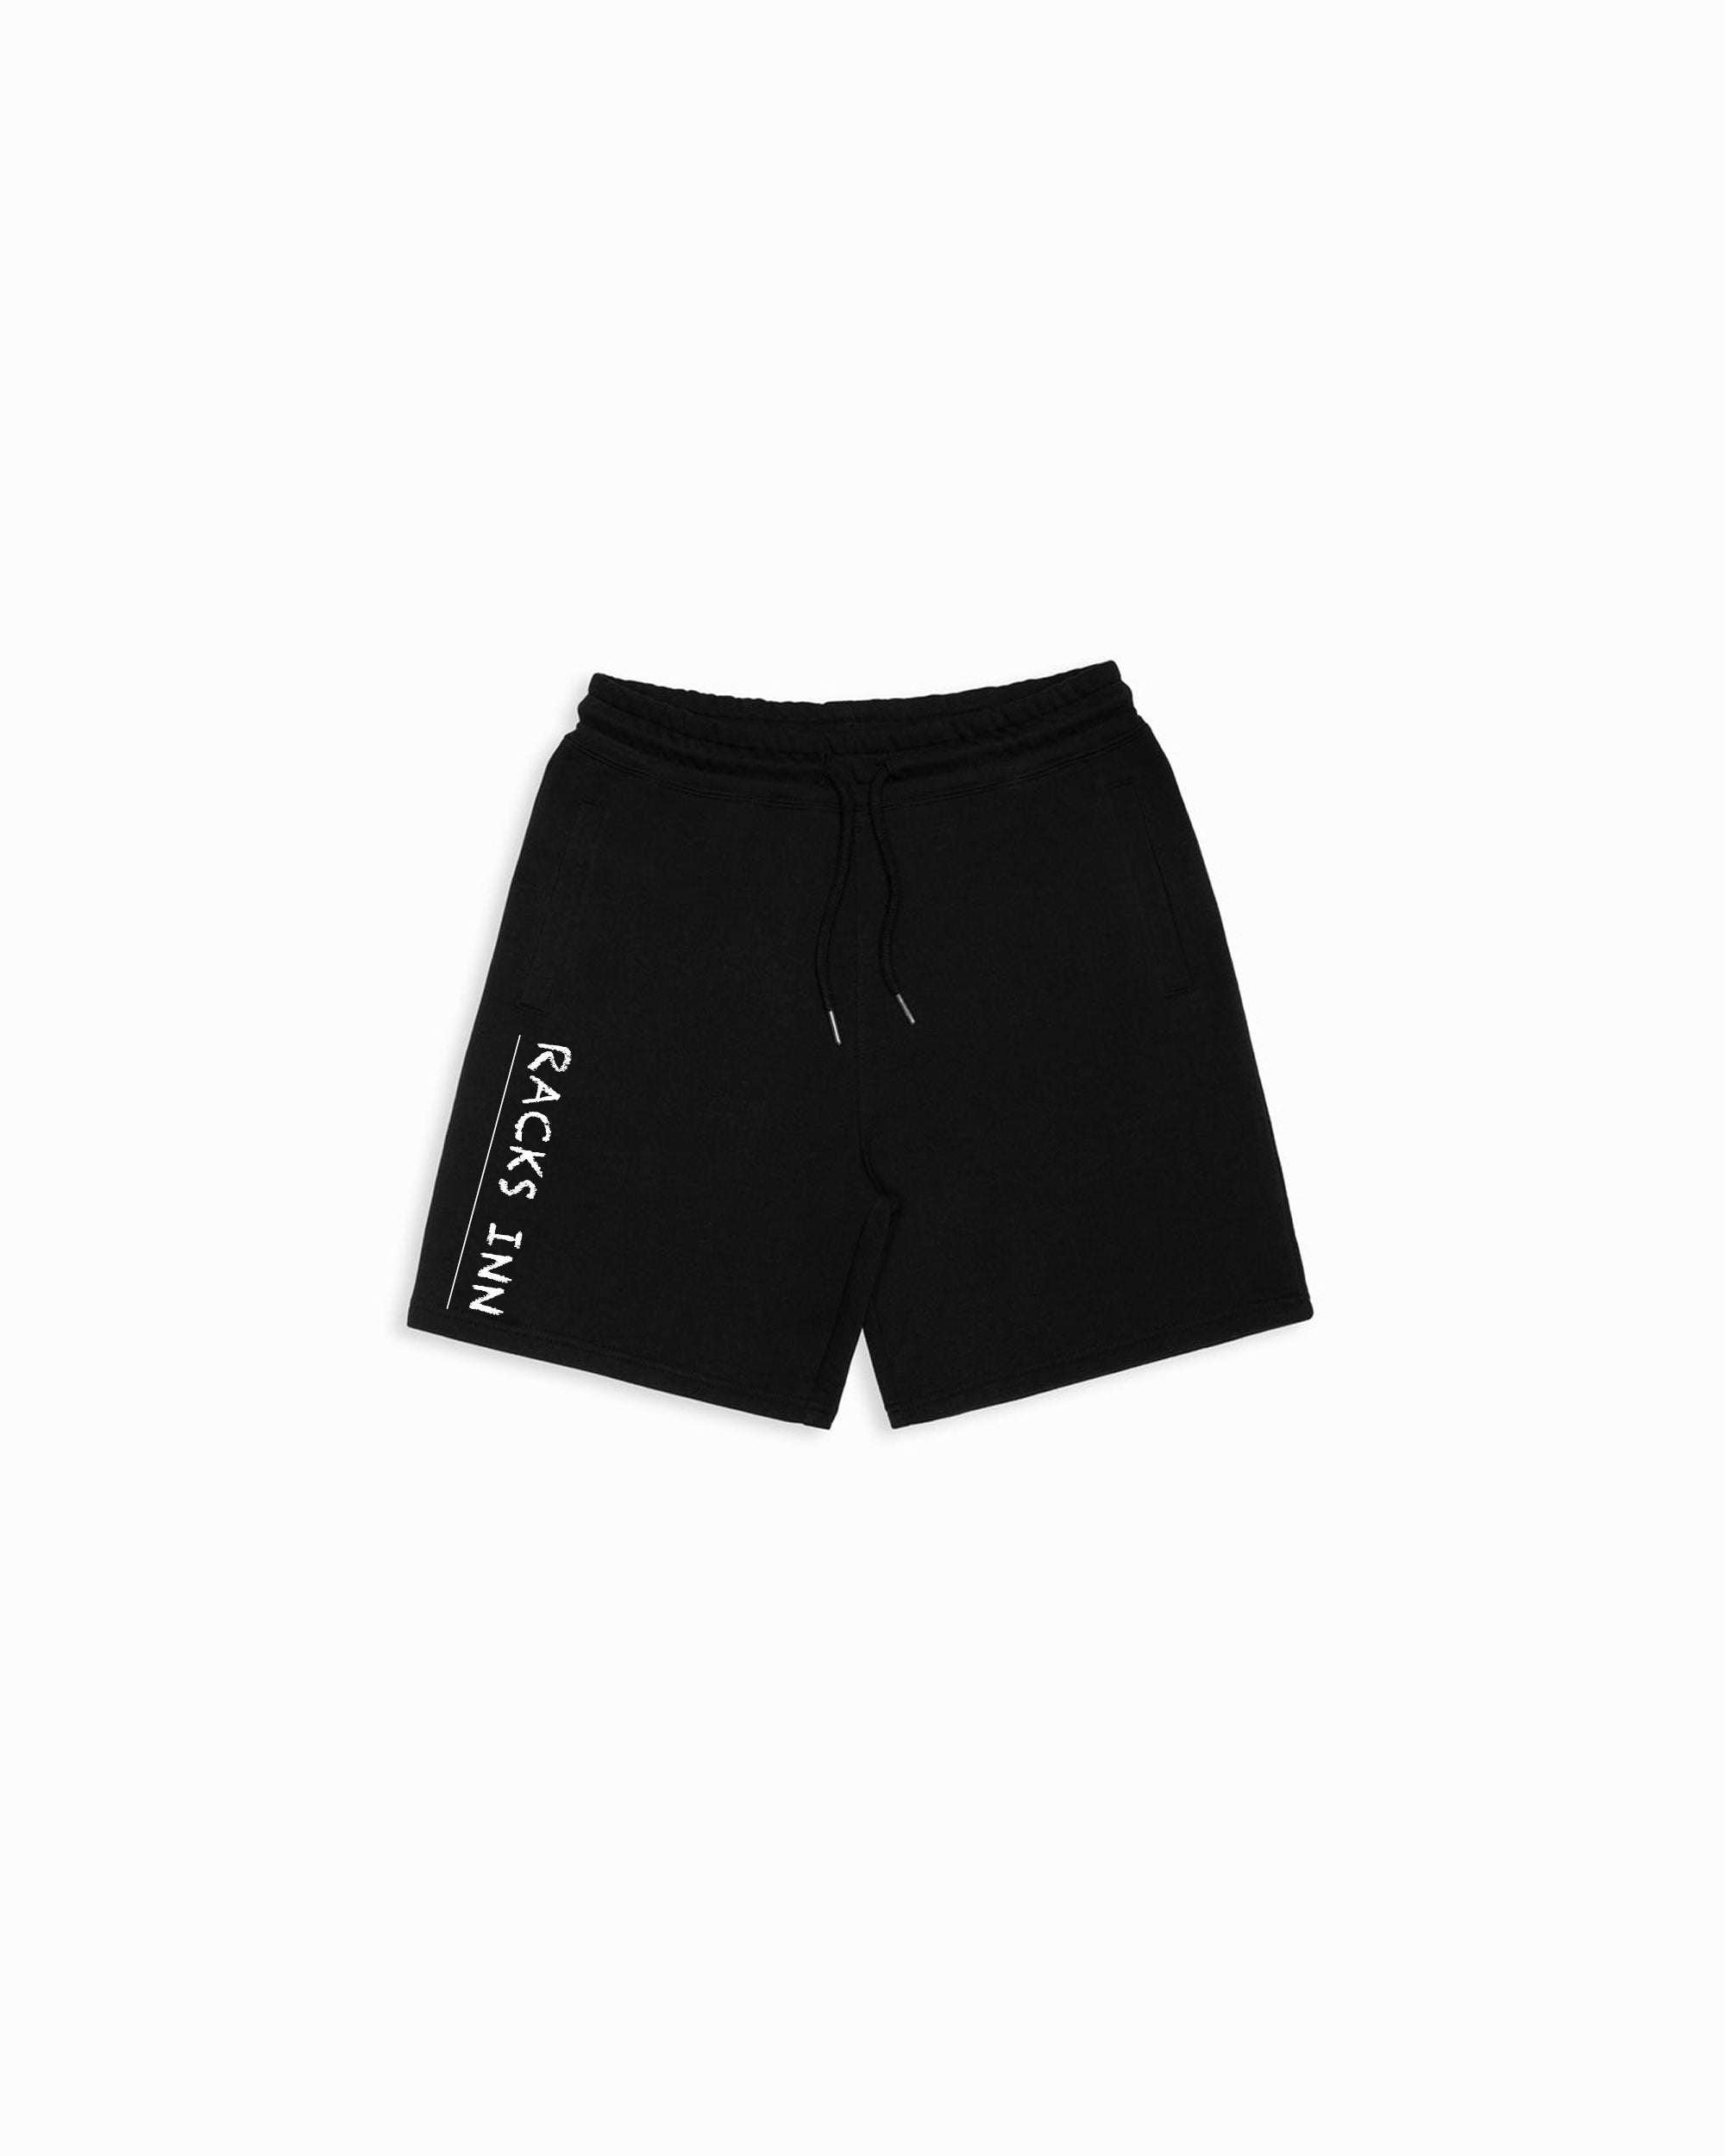 Powder Print Shorts - Black/White